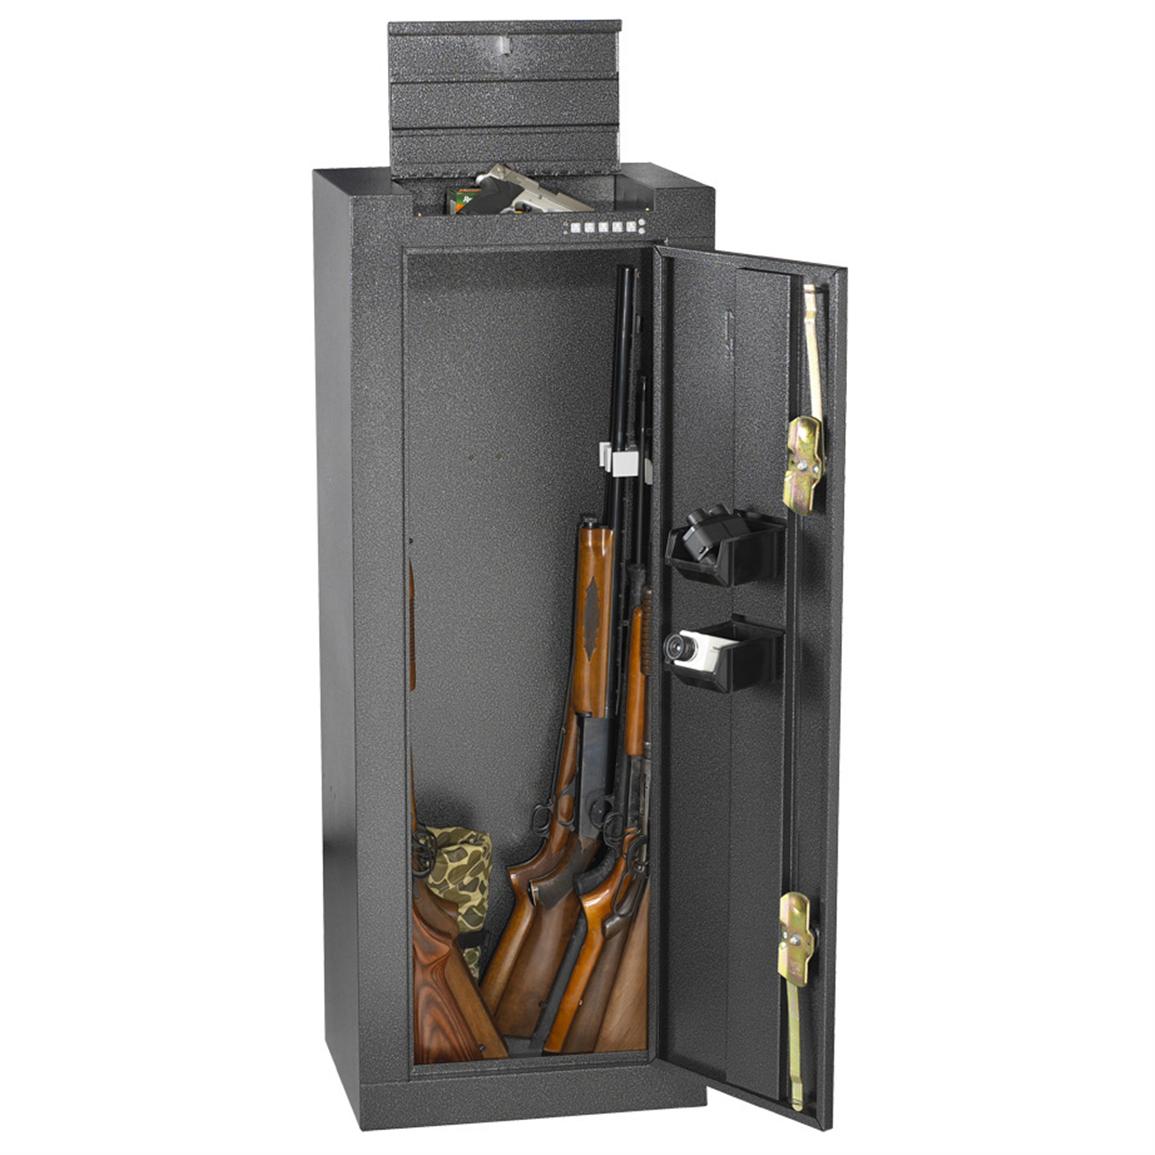 Homak® 14 Gun Security Cabinet With Quick Access Pistol Box 163671 Gun Safes At Sportsmans 9534